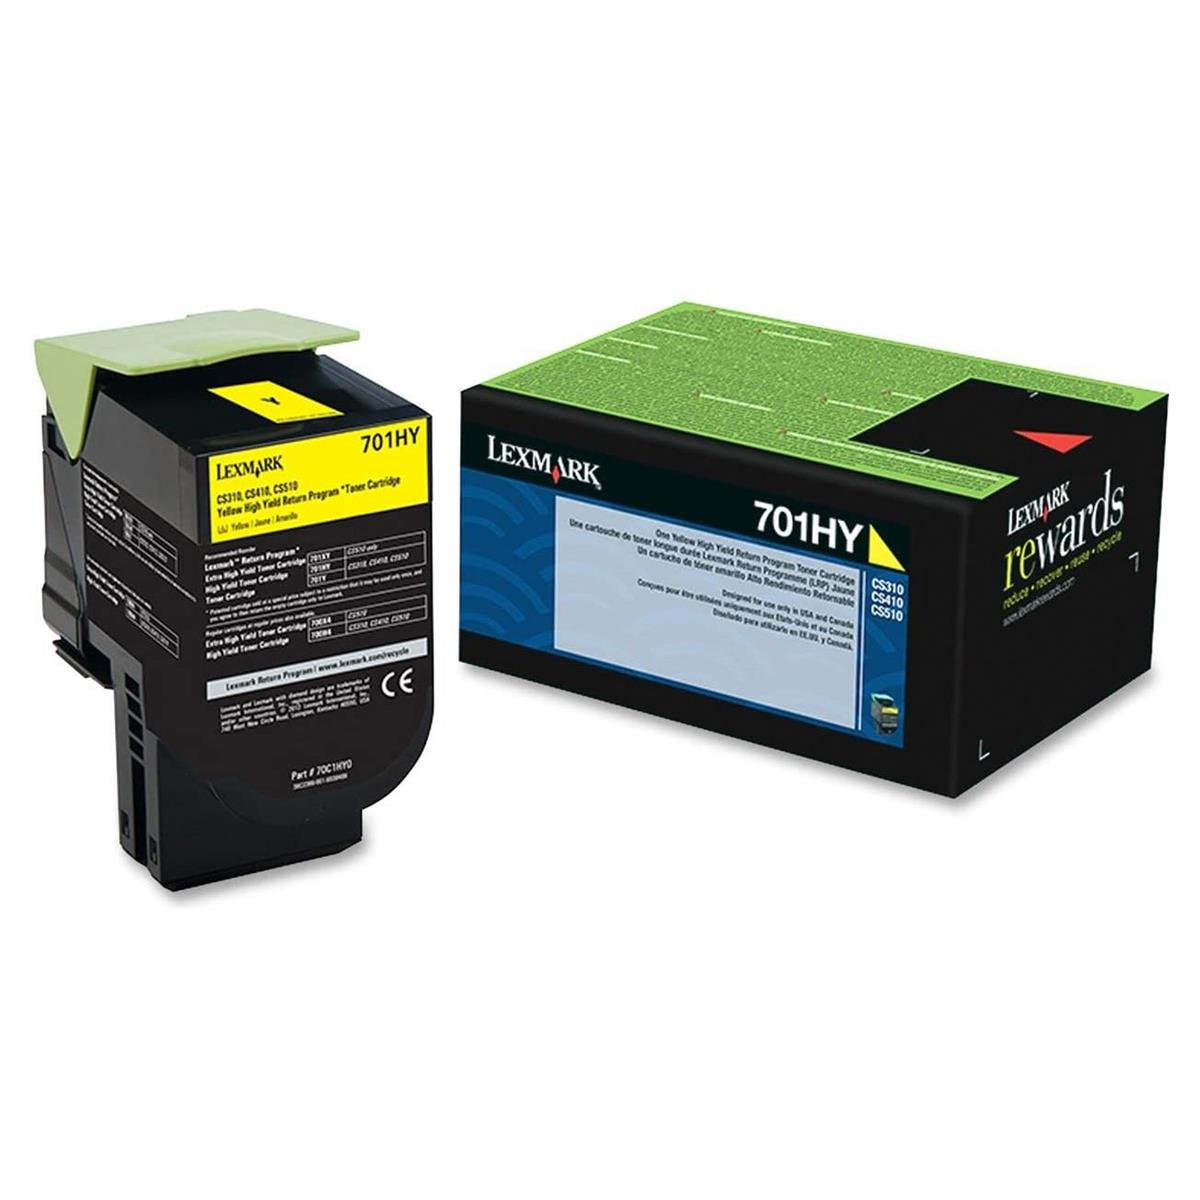 

Lexmark 701HY Toner Cartridge for CS310/CS410/CS510 Series Printers, Yellow